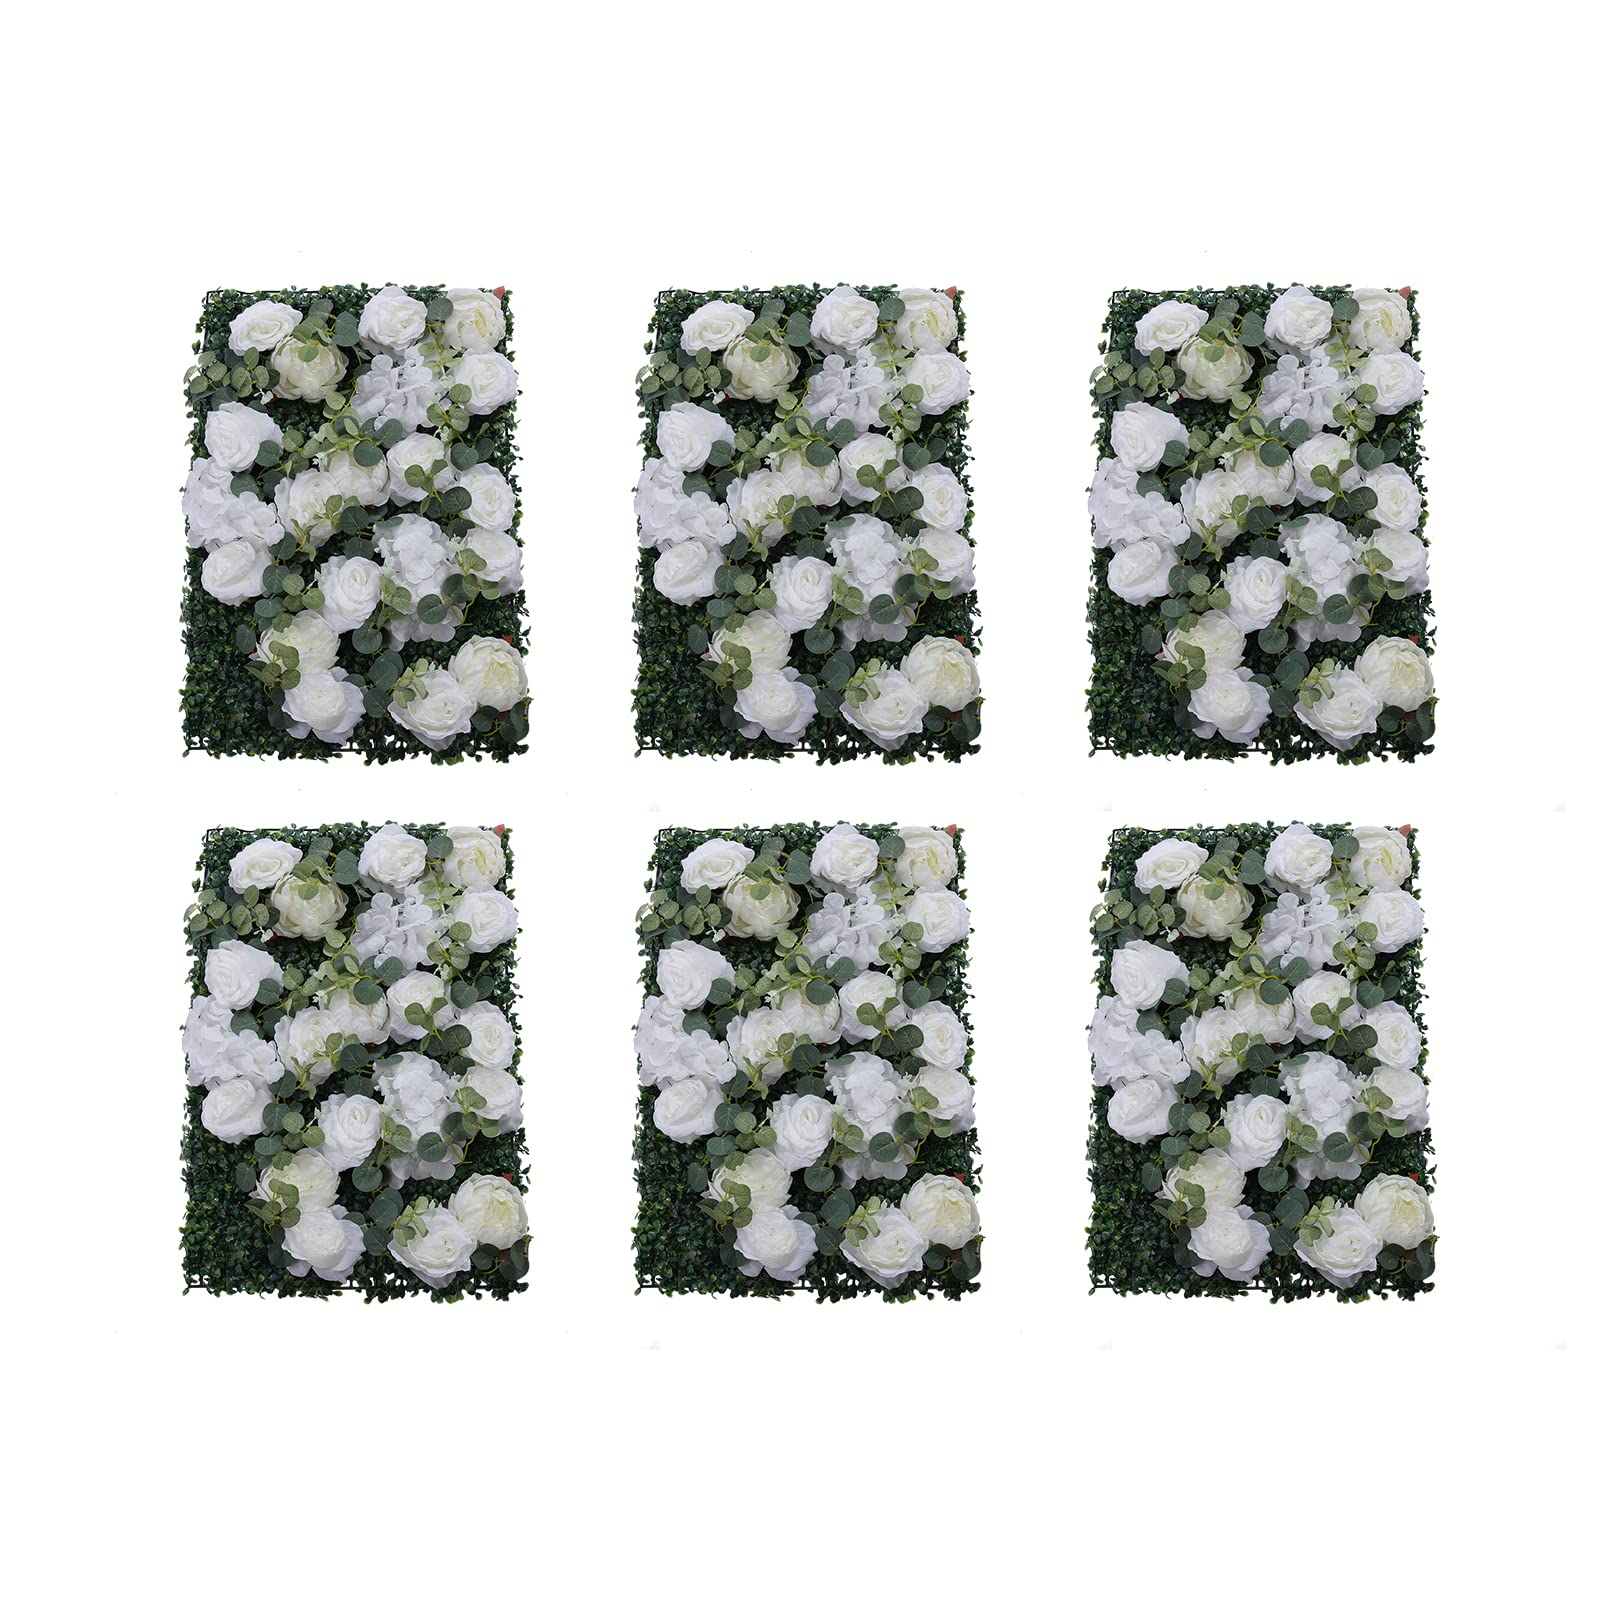 6 pannelli da parete a forma di fiore